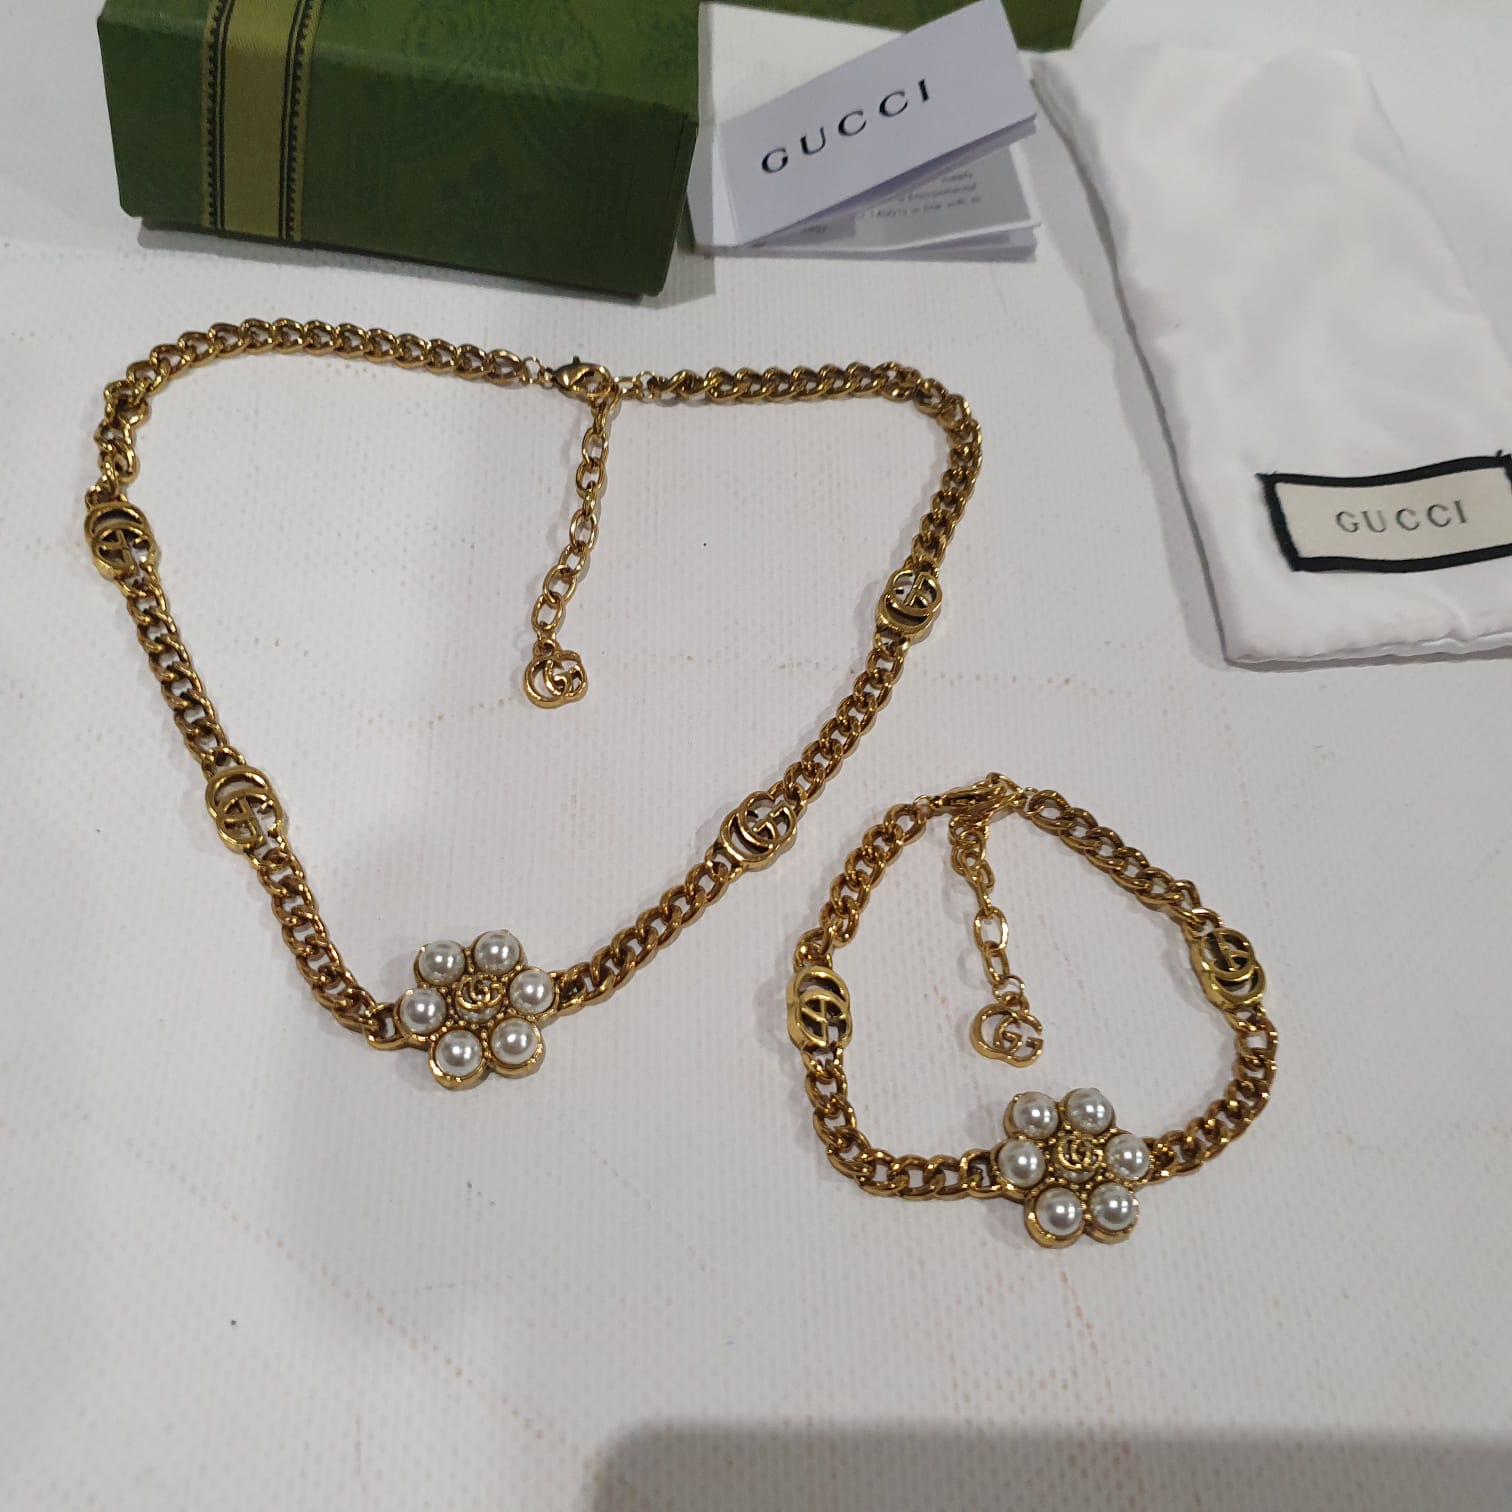 Gucci  Necklace and Bracelet